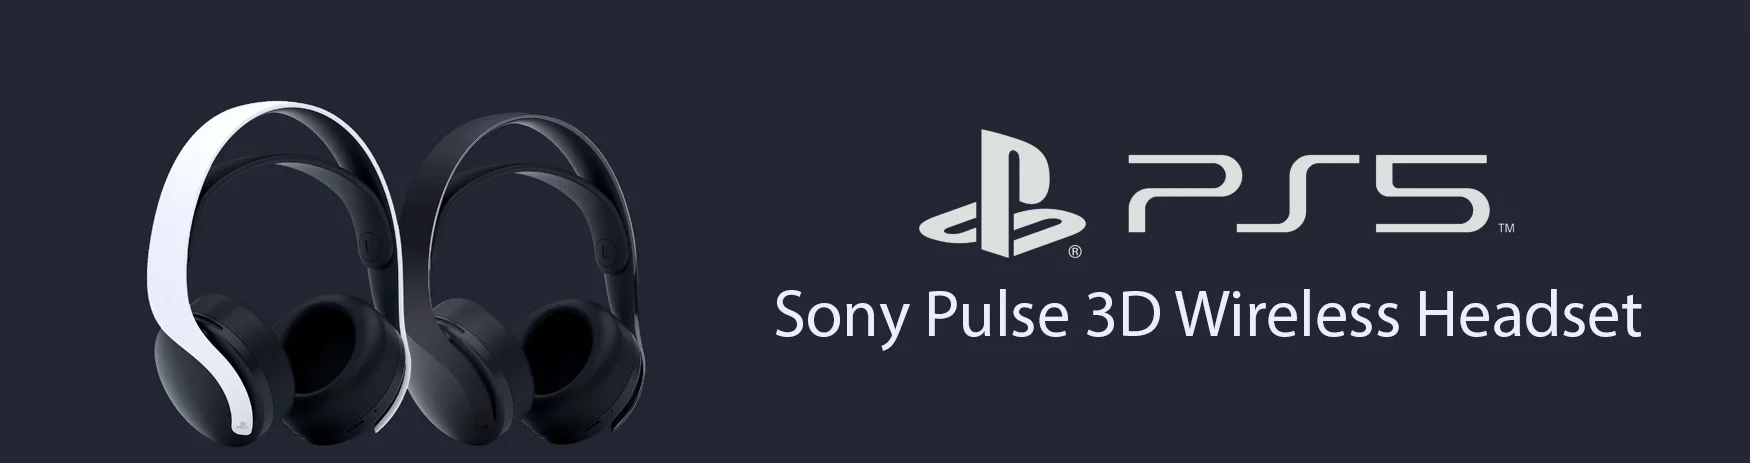 Playstation 5 Pulse 3D Wireless Headset